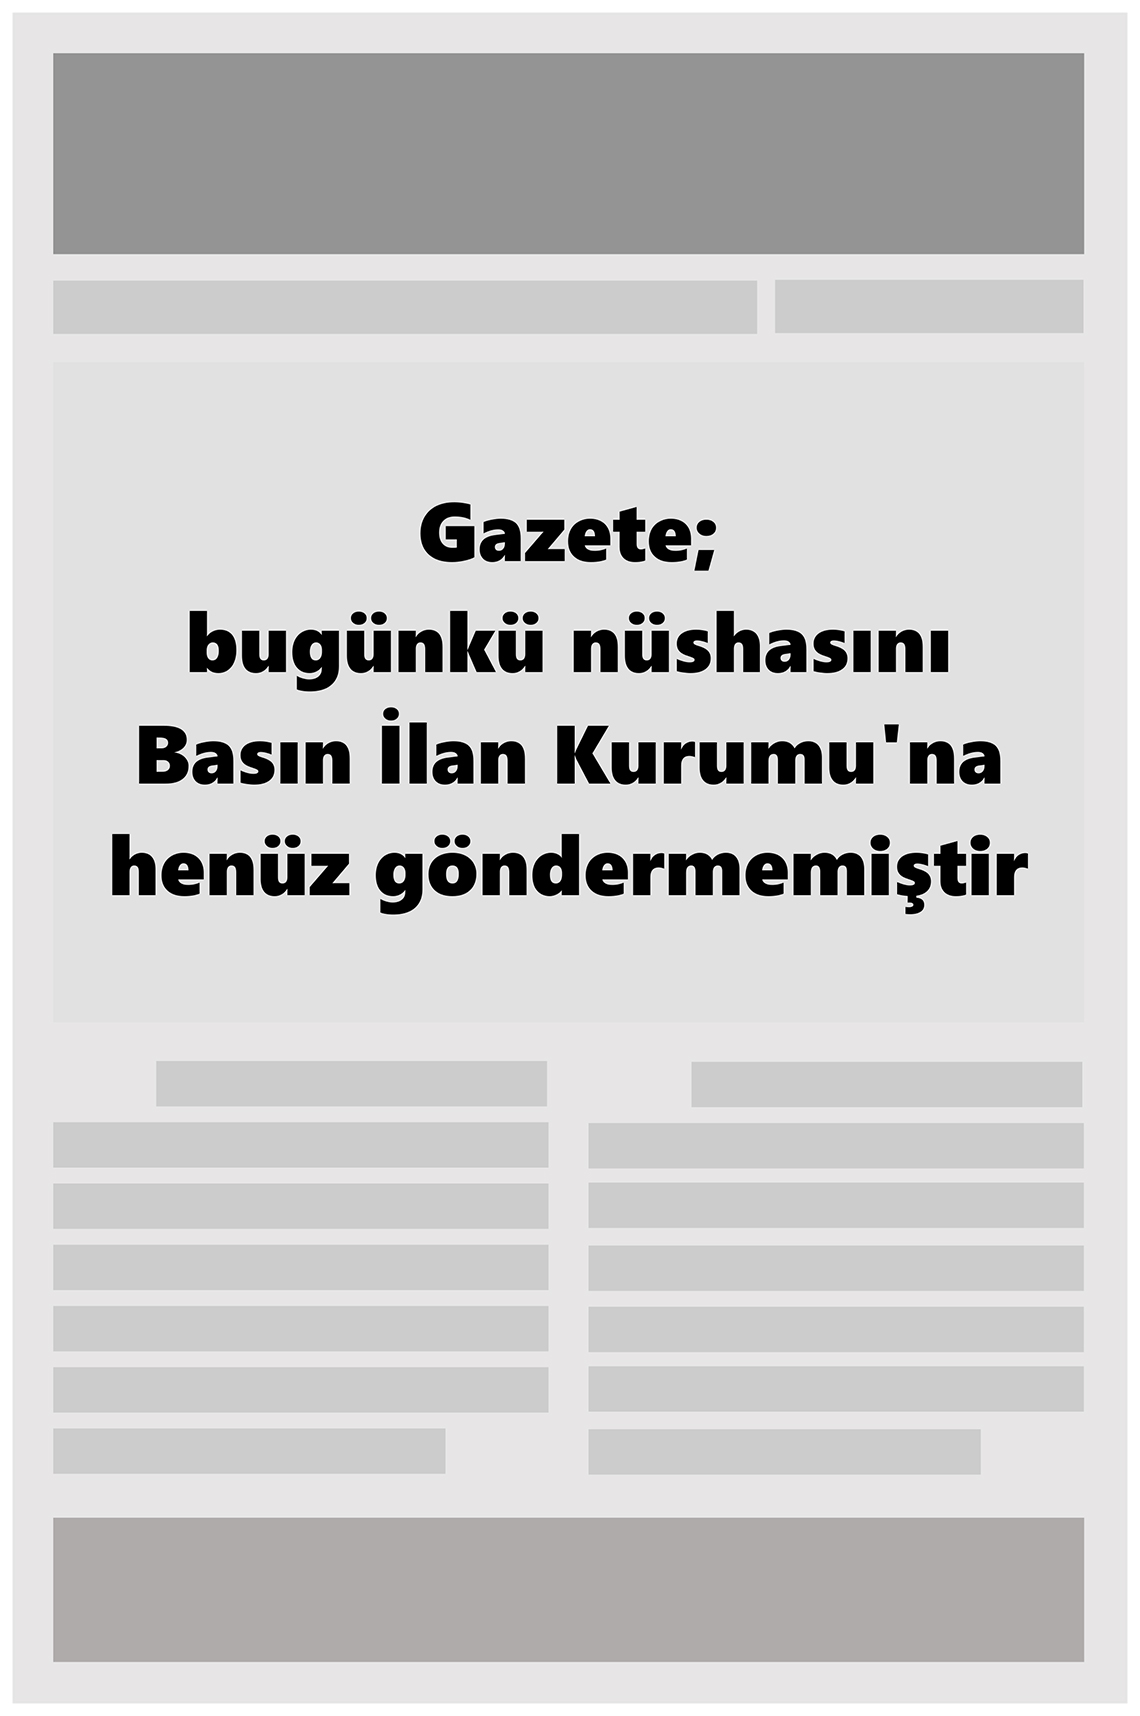 03 Temmuz 2022 Gazete 3 Gazete Manşeti